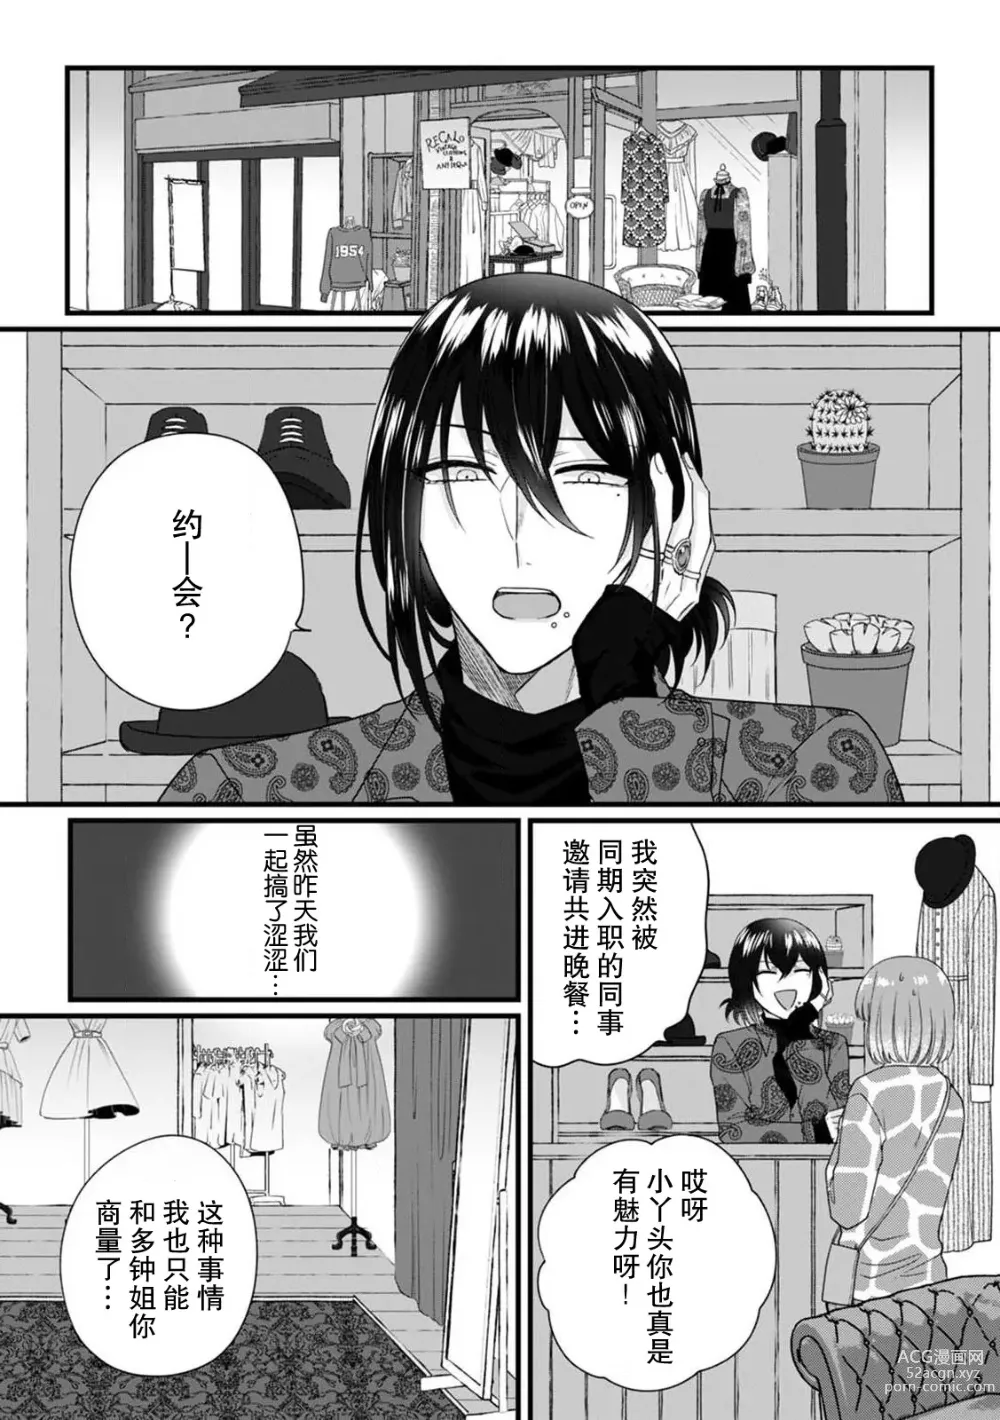 Page 22 of manga 弄湿我的是青梅竹马的男大姐 第一次见到……他认真的雄性一面。 1-5 end